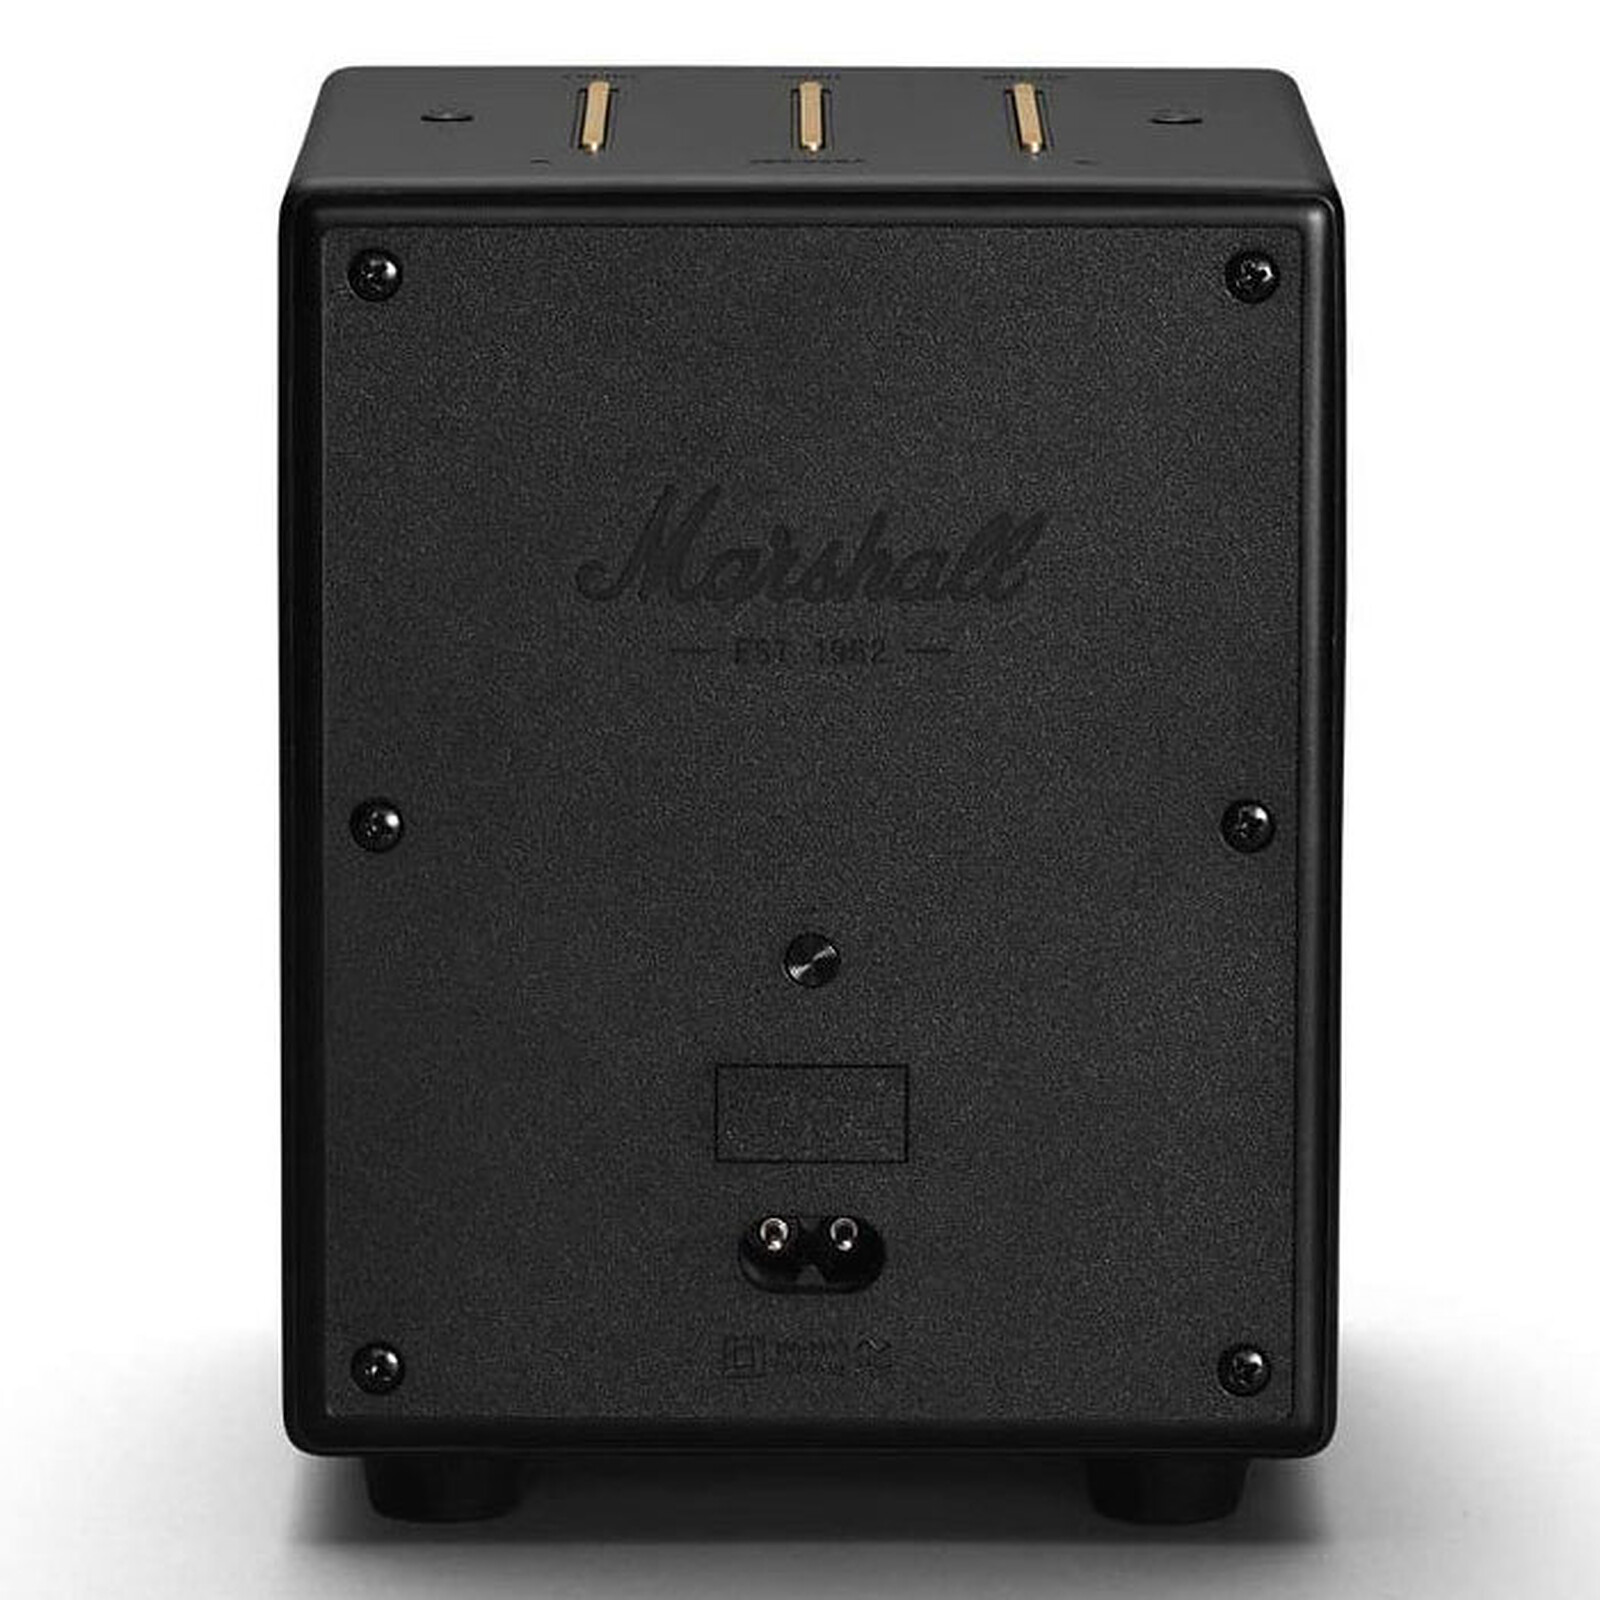 Marshall Uxbridge Voice Holy warranty Bluetooth | Moley Black LDLC Alexa speaker - - 3-year